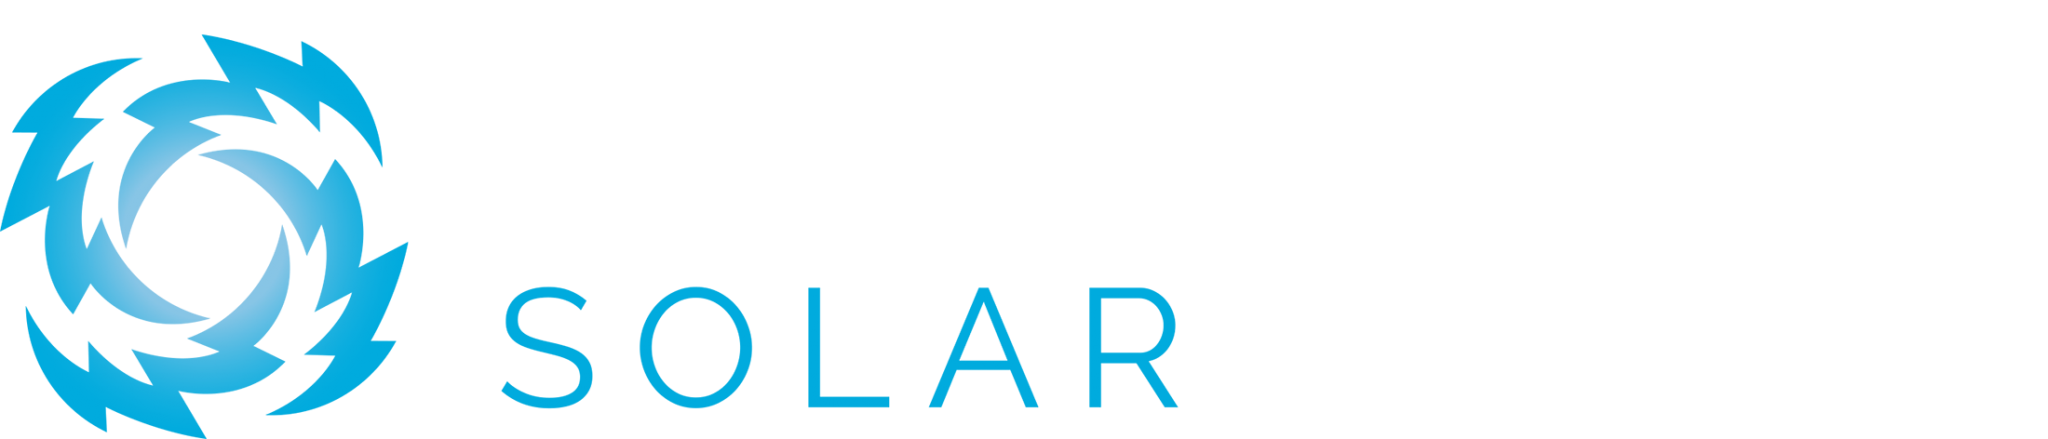 final-solar-logo-white